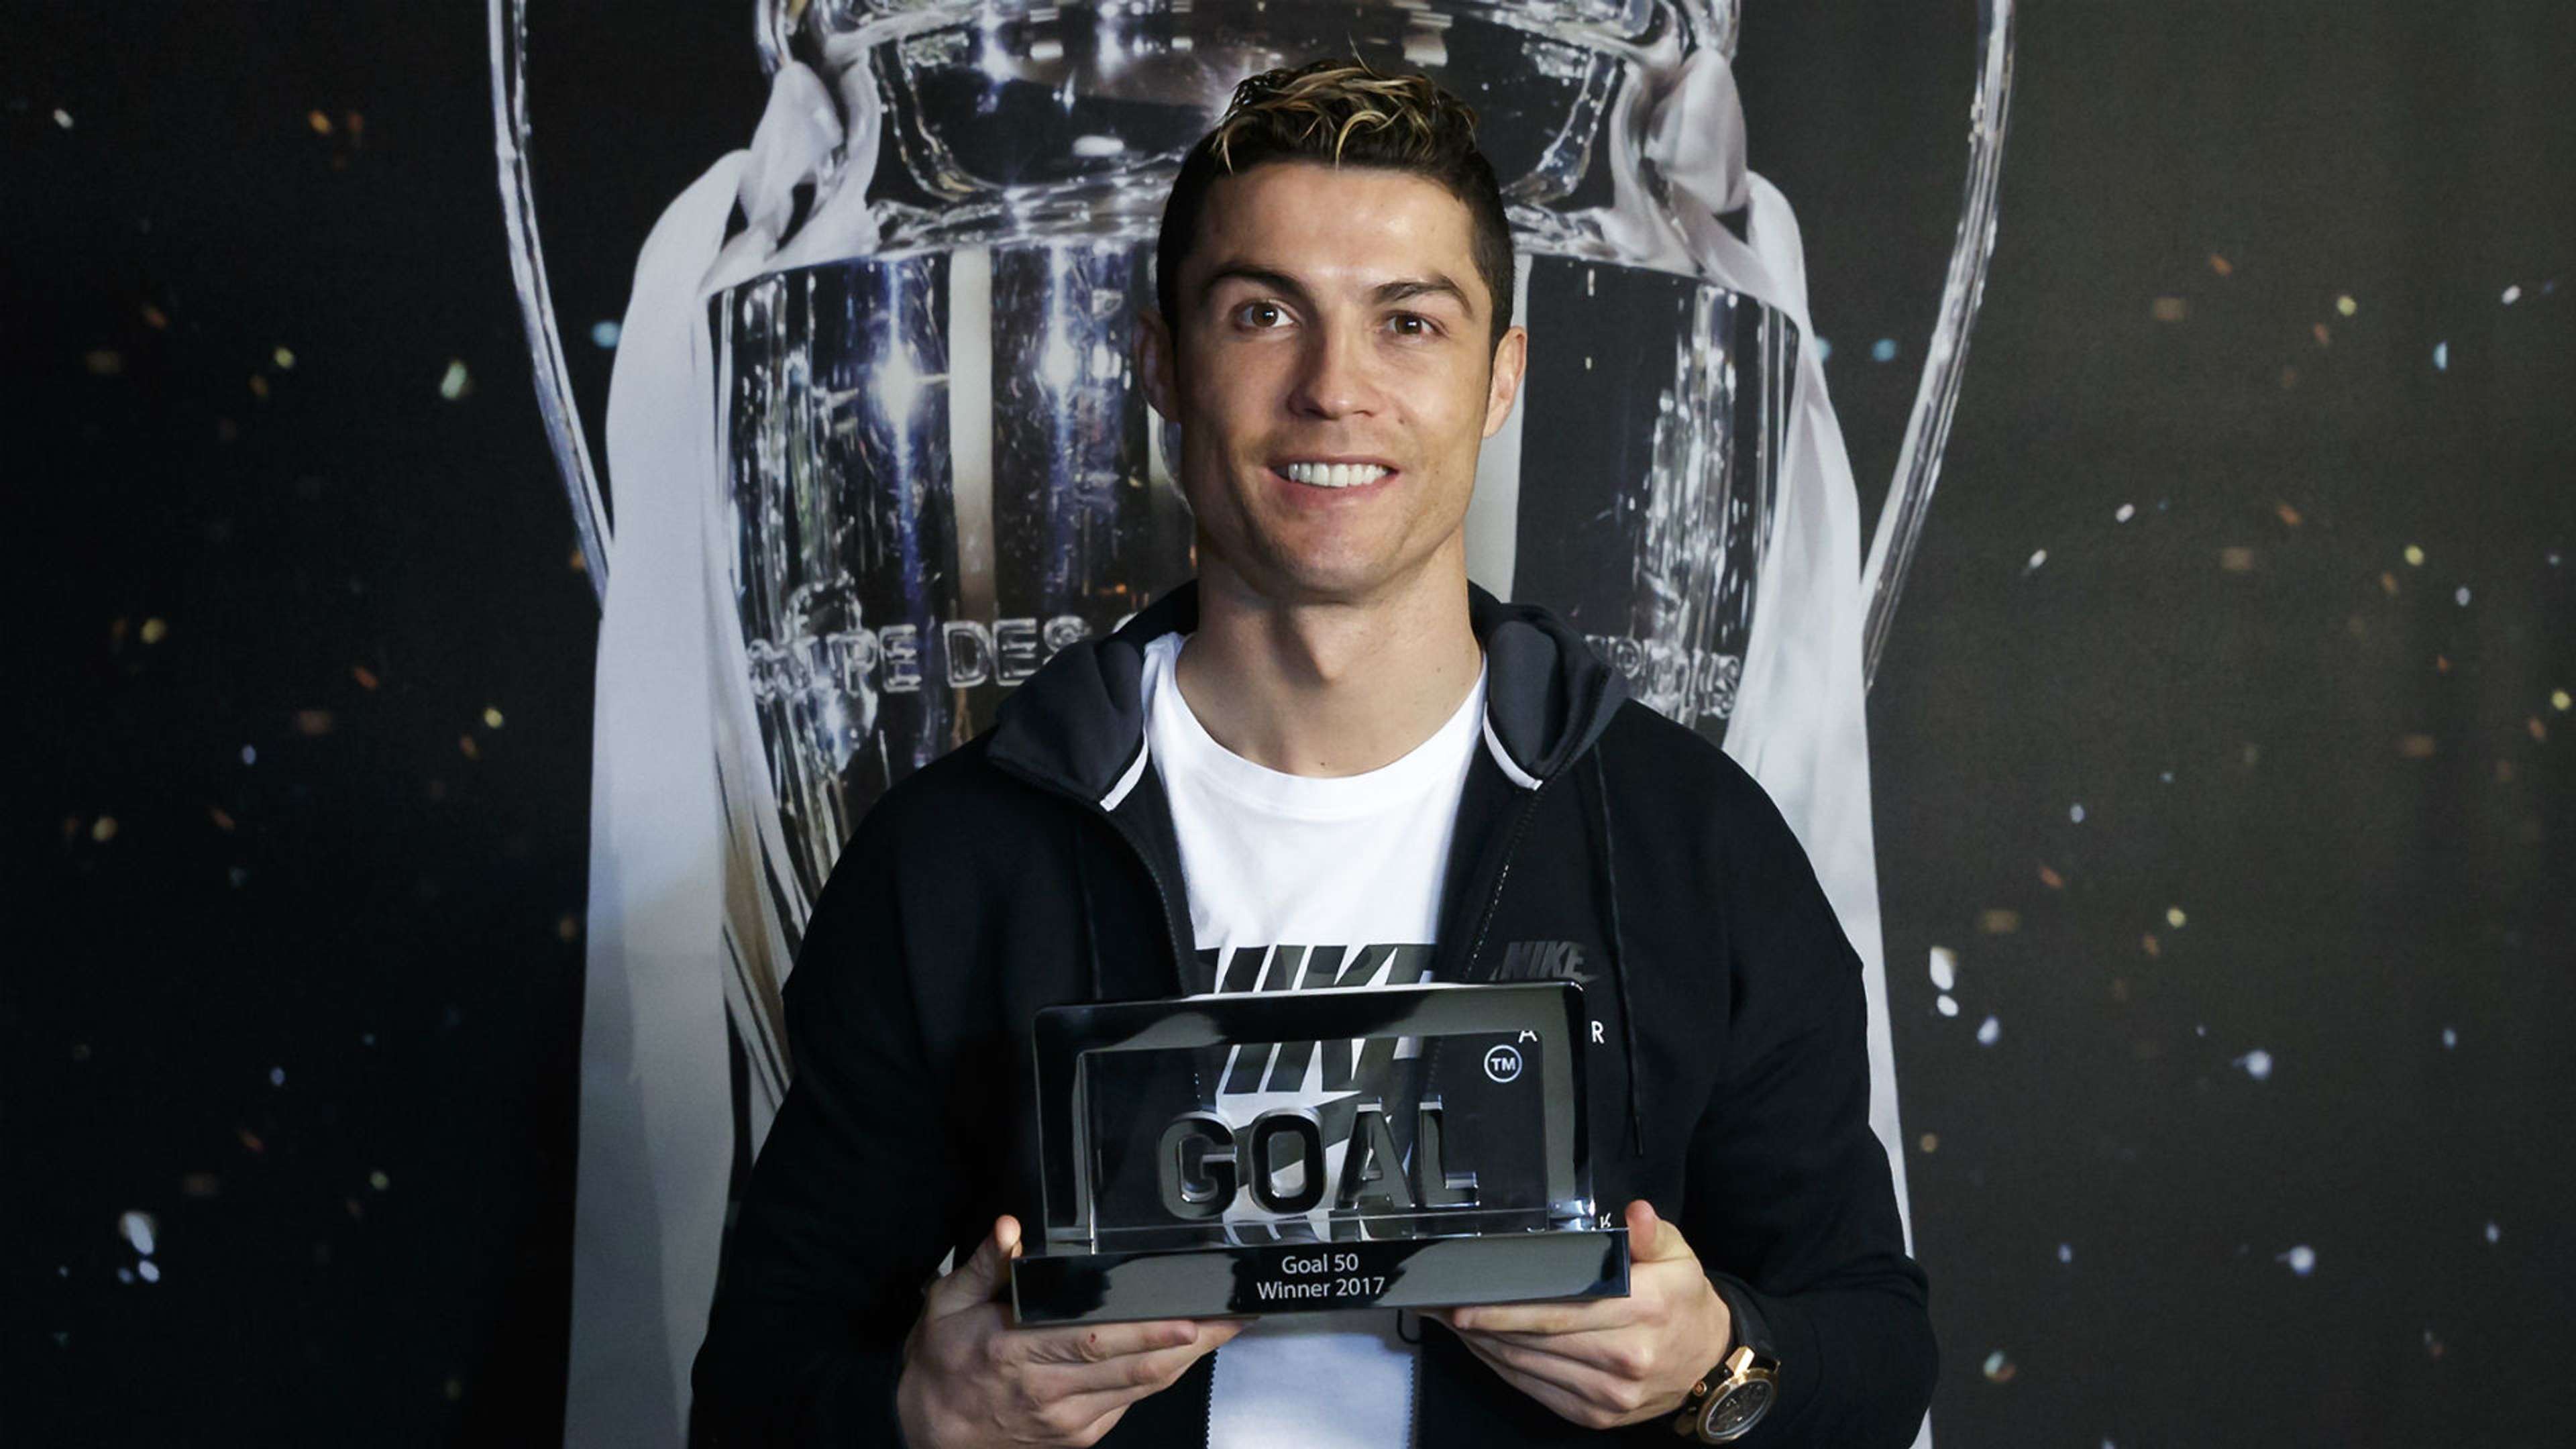 Cristiano Ronaldo Goal 50 award